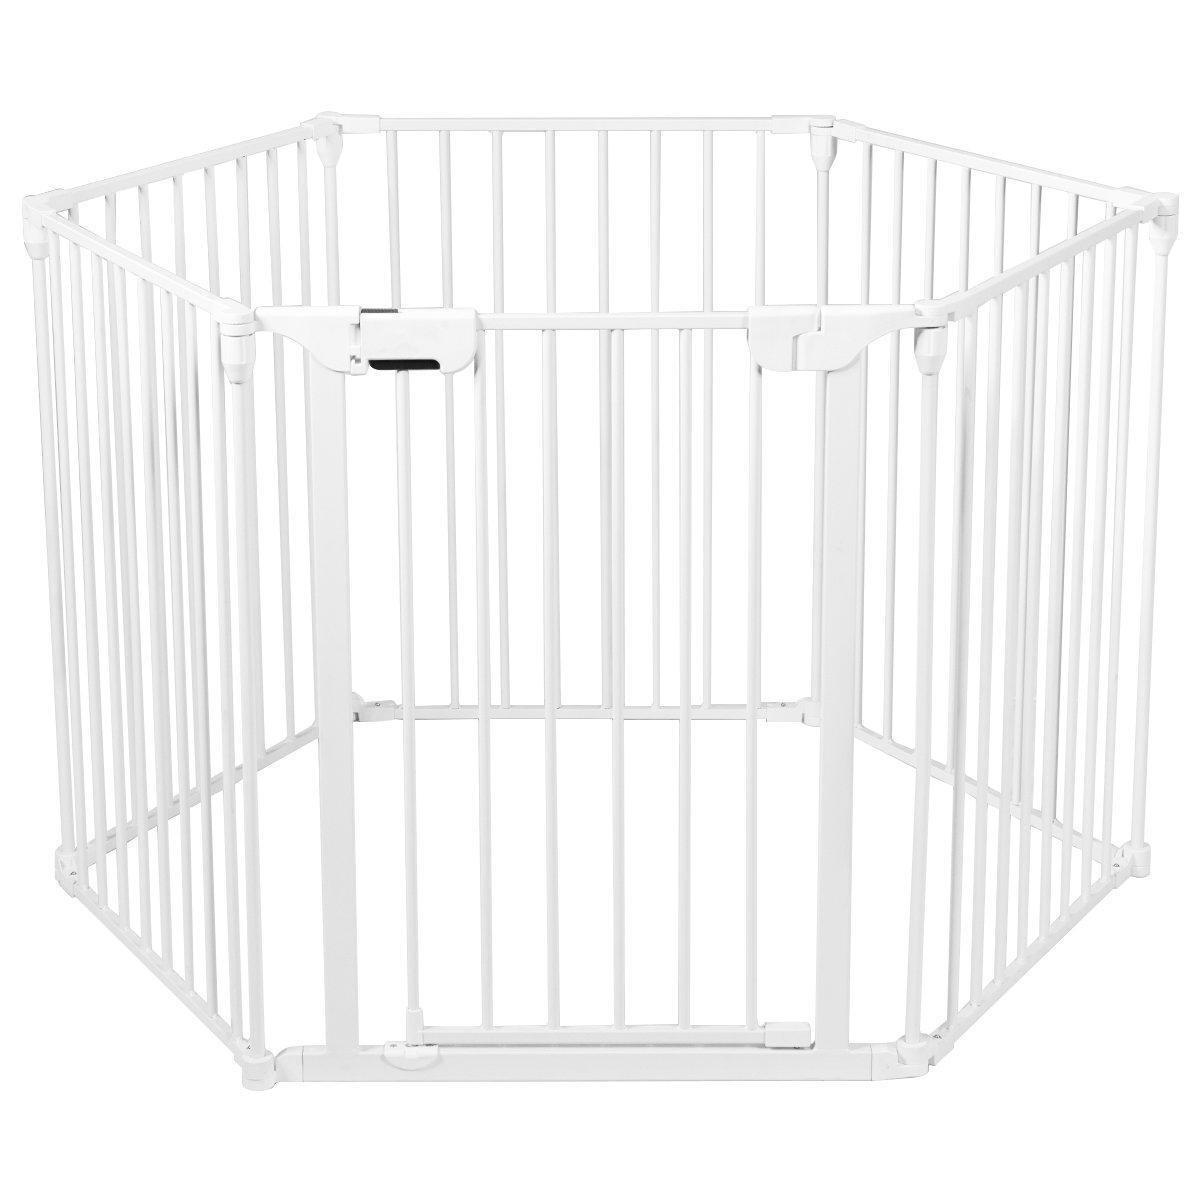 6 Panel Fireplace Fence Baby Pet Safety Gate Playpen Adjustable Room Divider - image 1